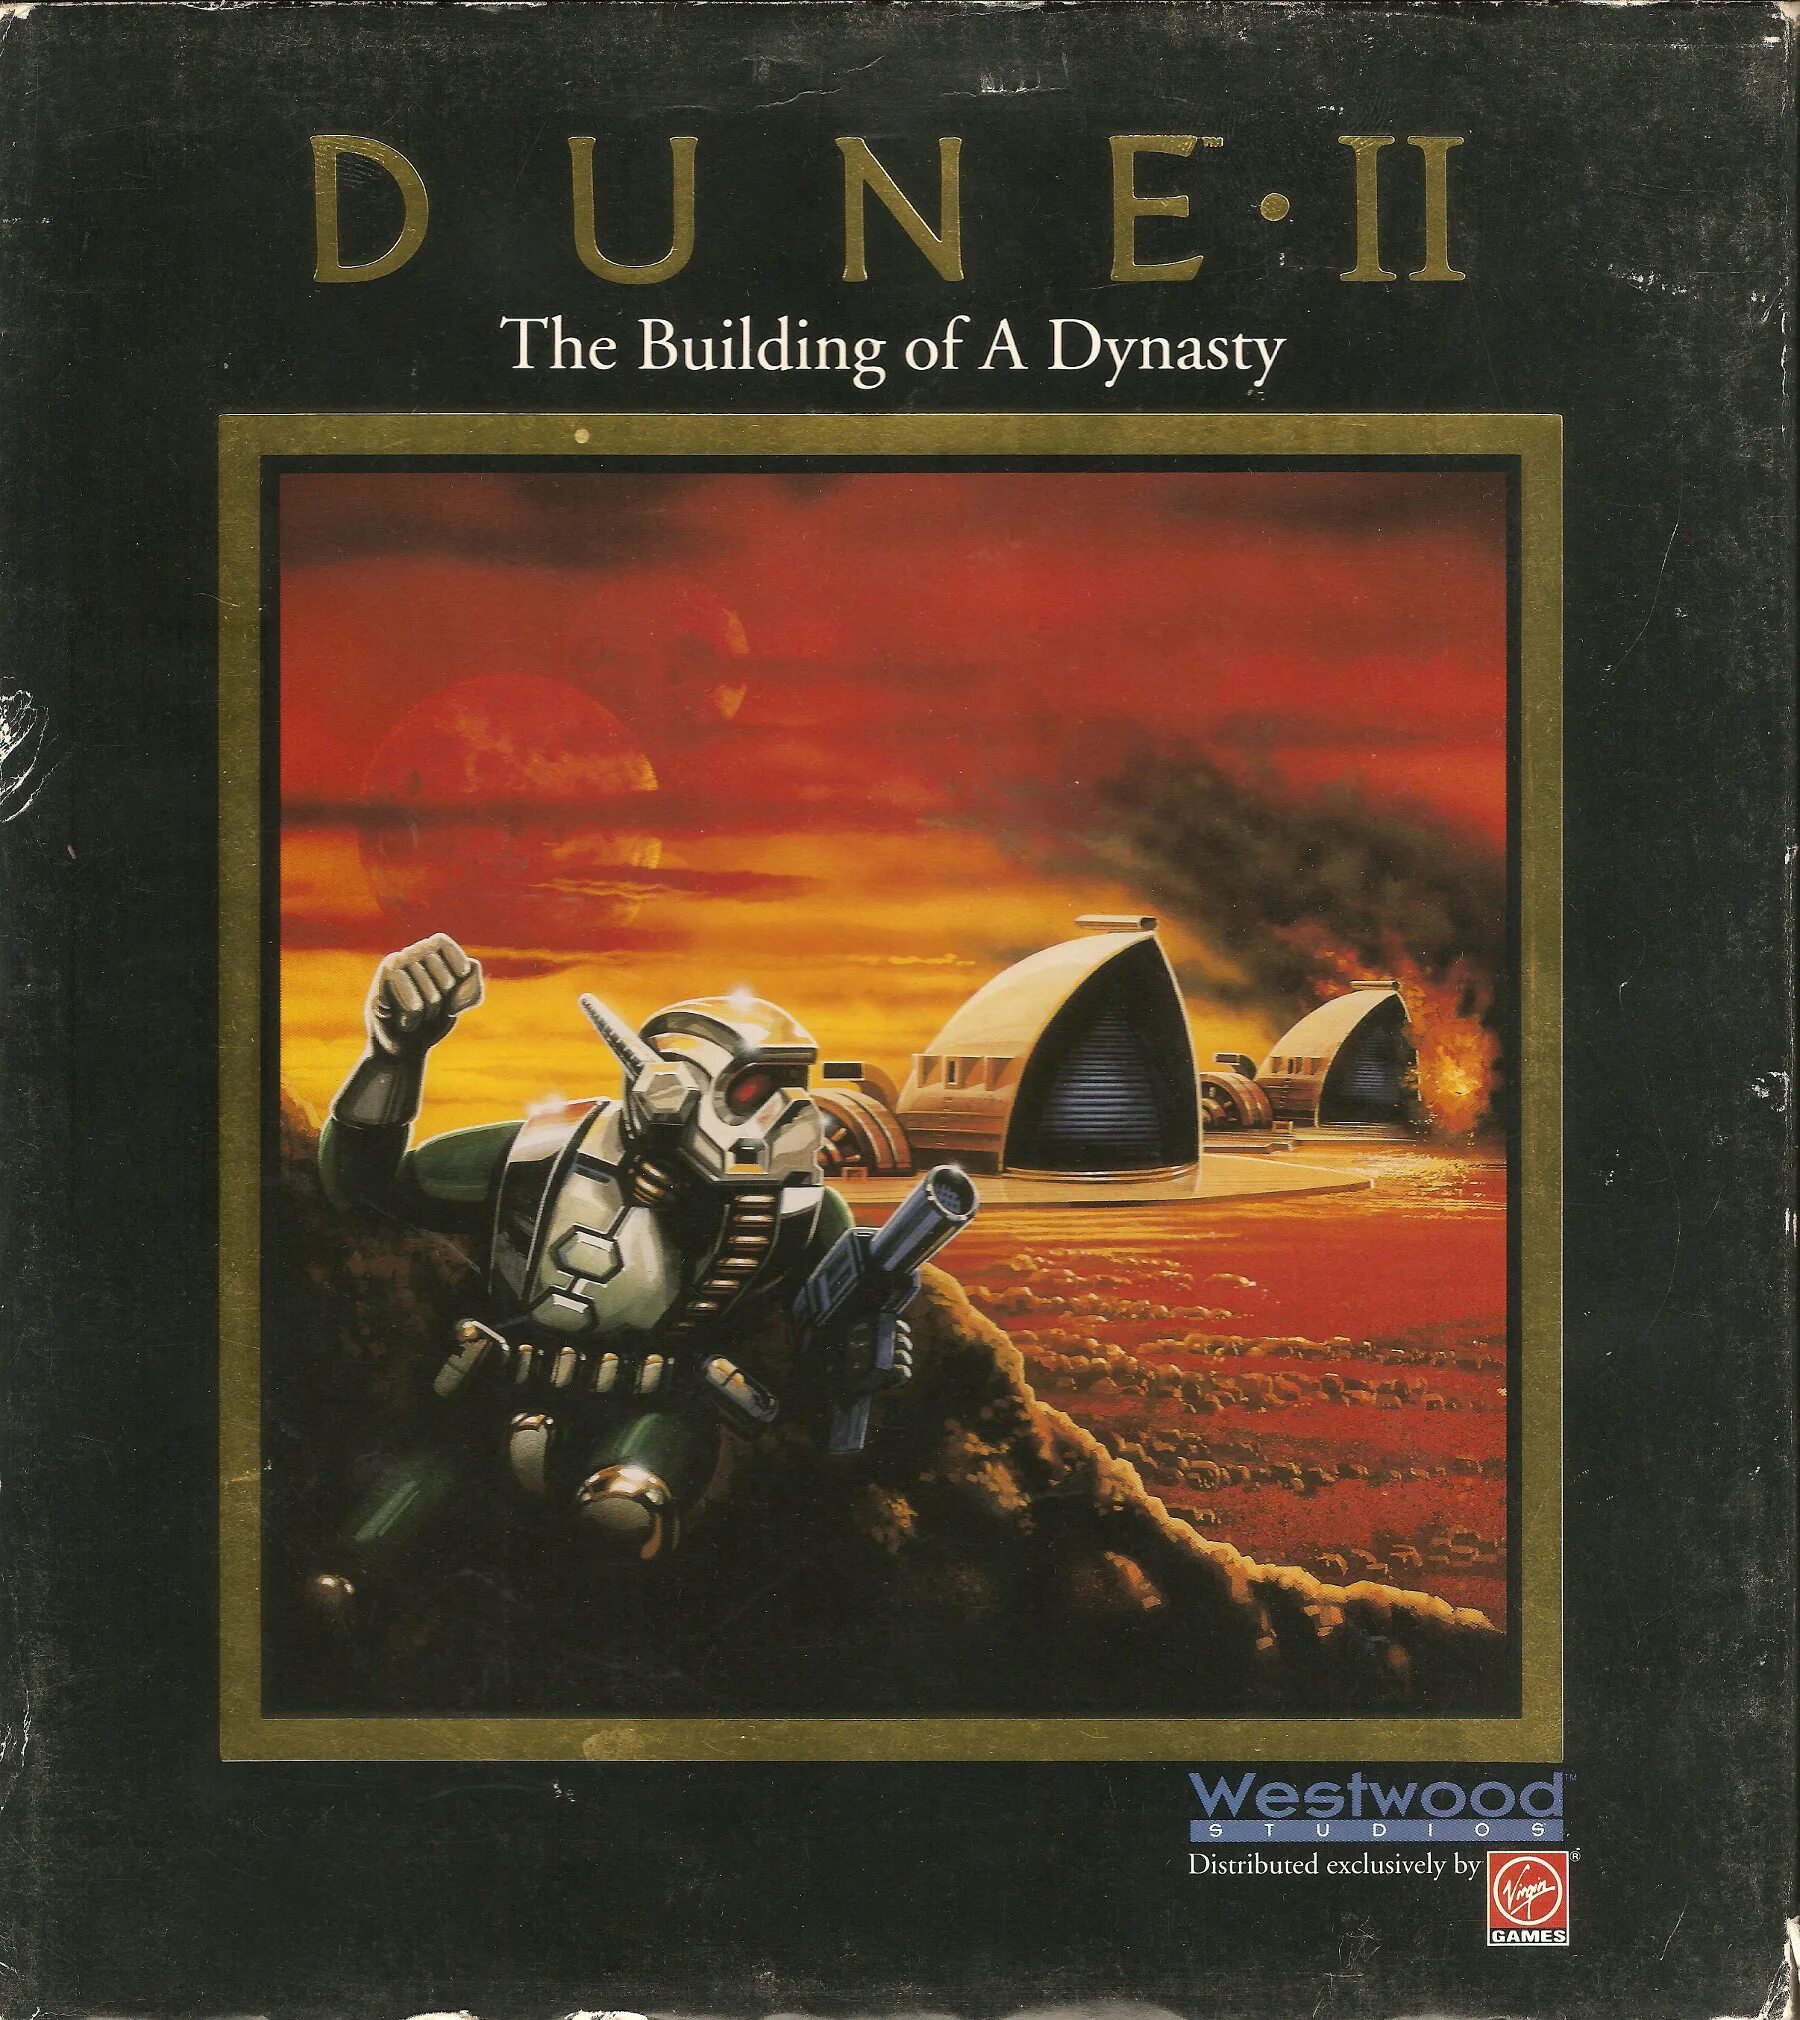 Дюна 2 кинотеатр москва где. Dune II: the building of a Dynasty обложка. Dune 1992 игра обложка. Dune the building of a Dynasty сега. Dune 2 the Battle for ARRAKIS обложка.